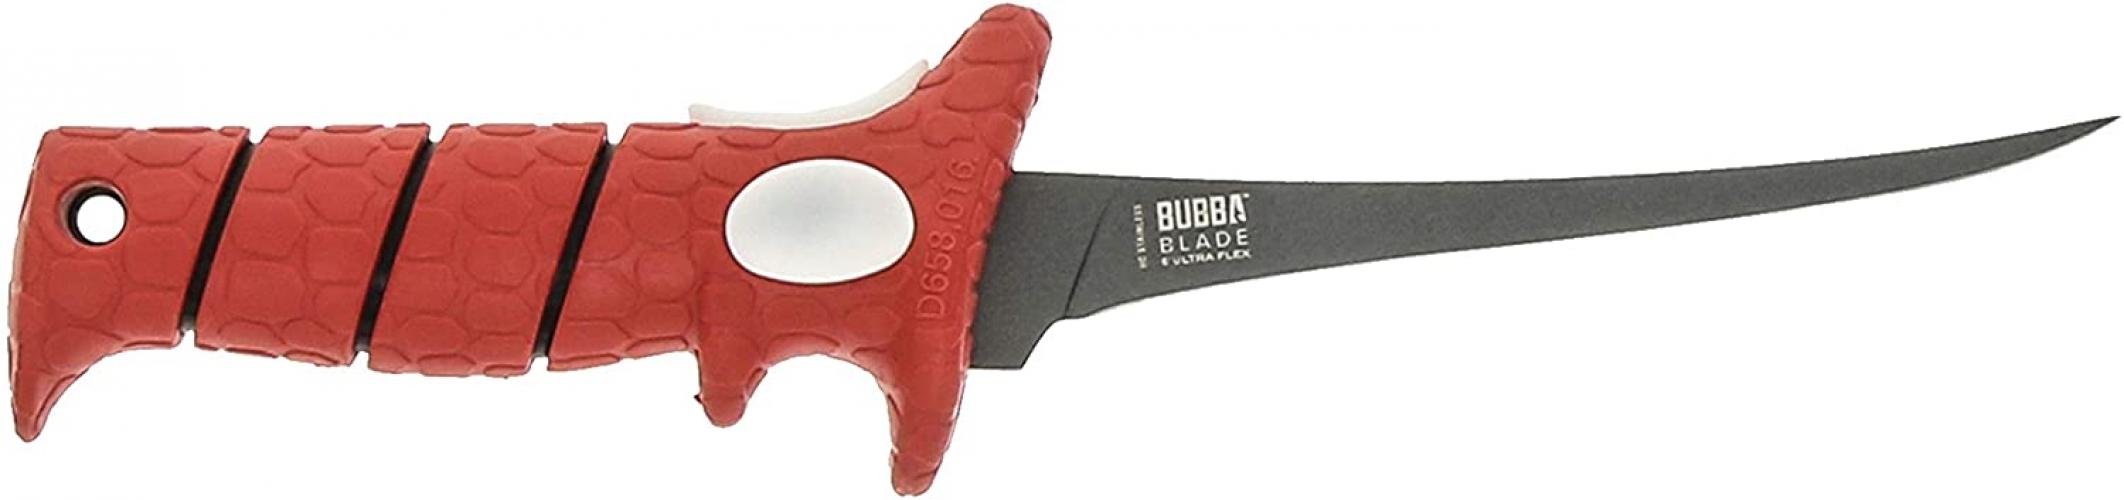 Bubba 6" Fillet Knife